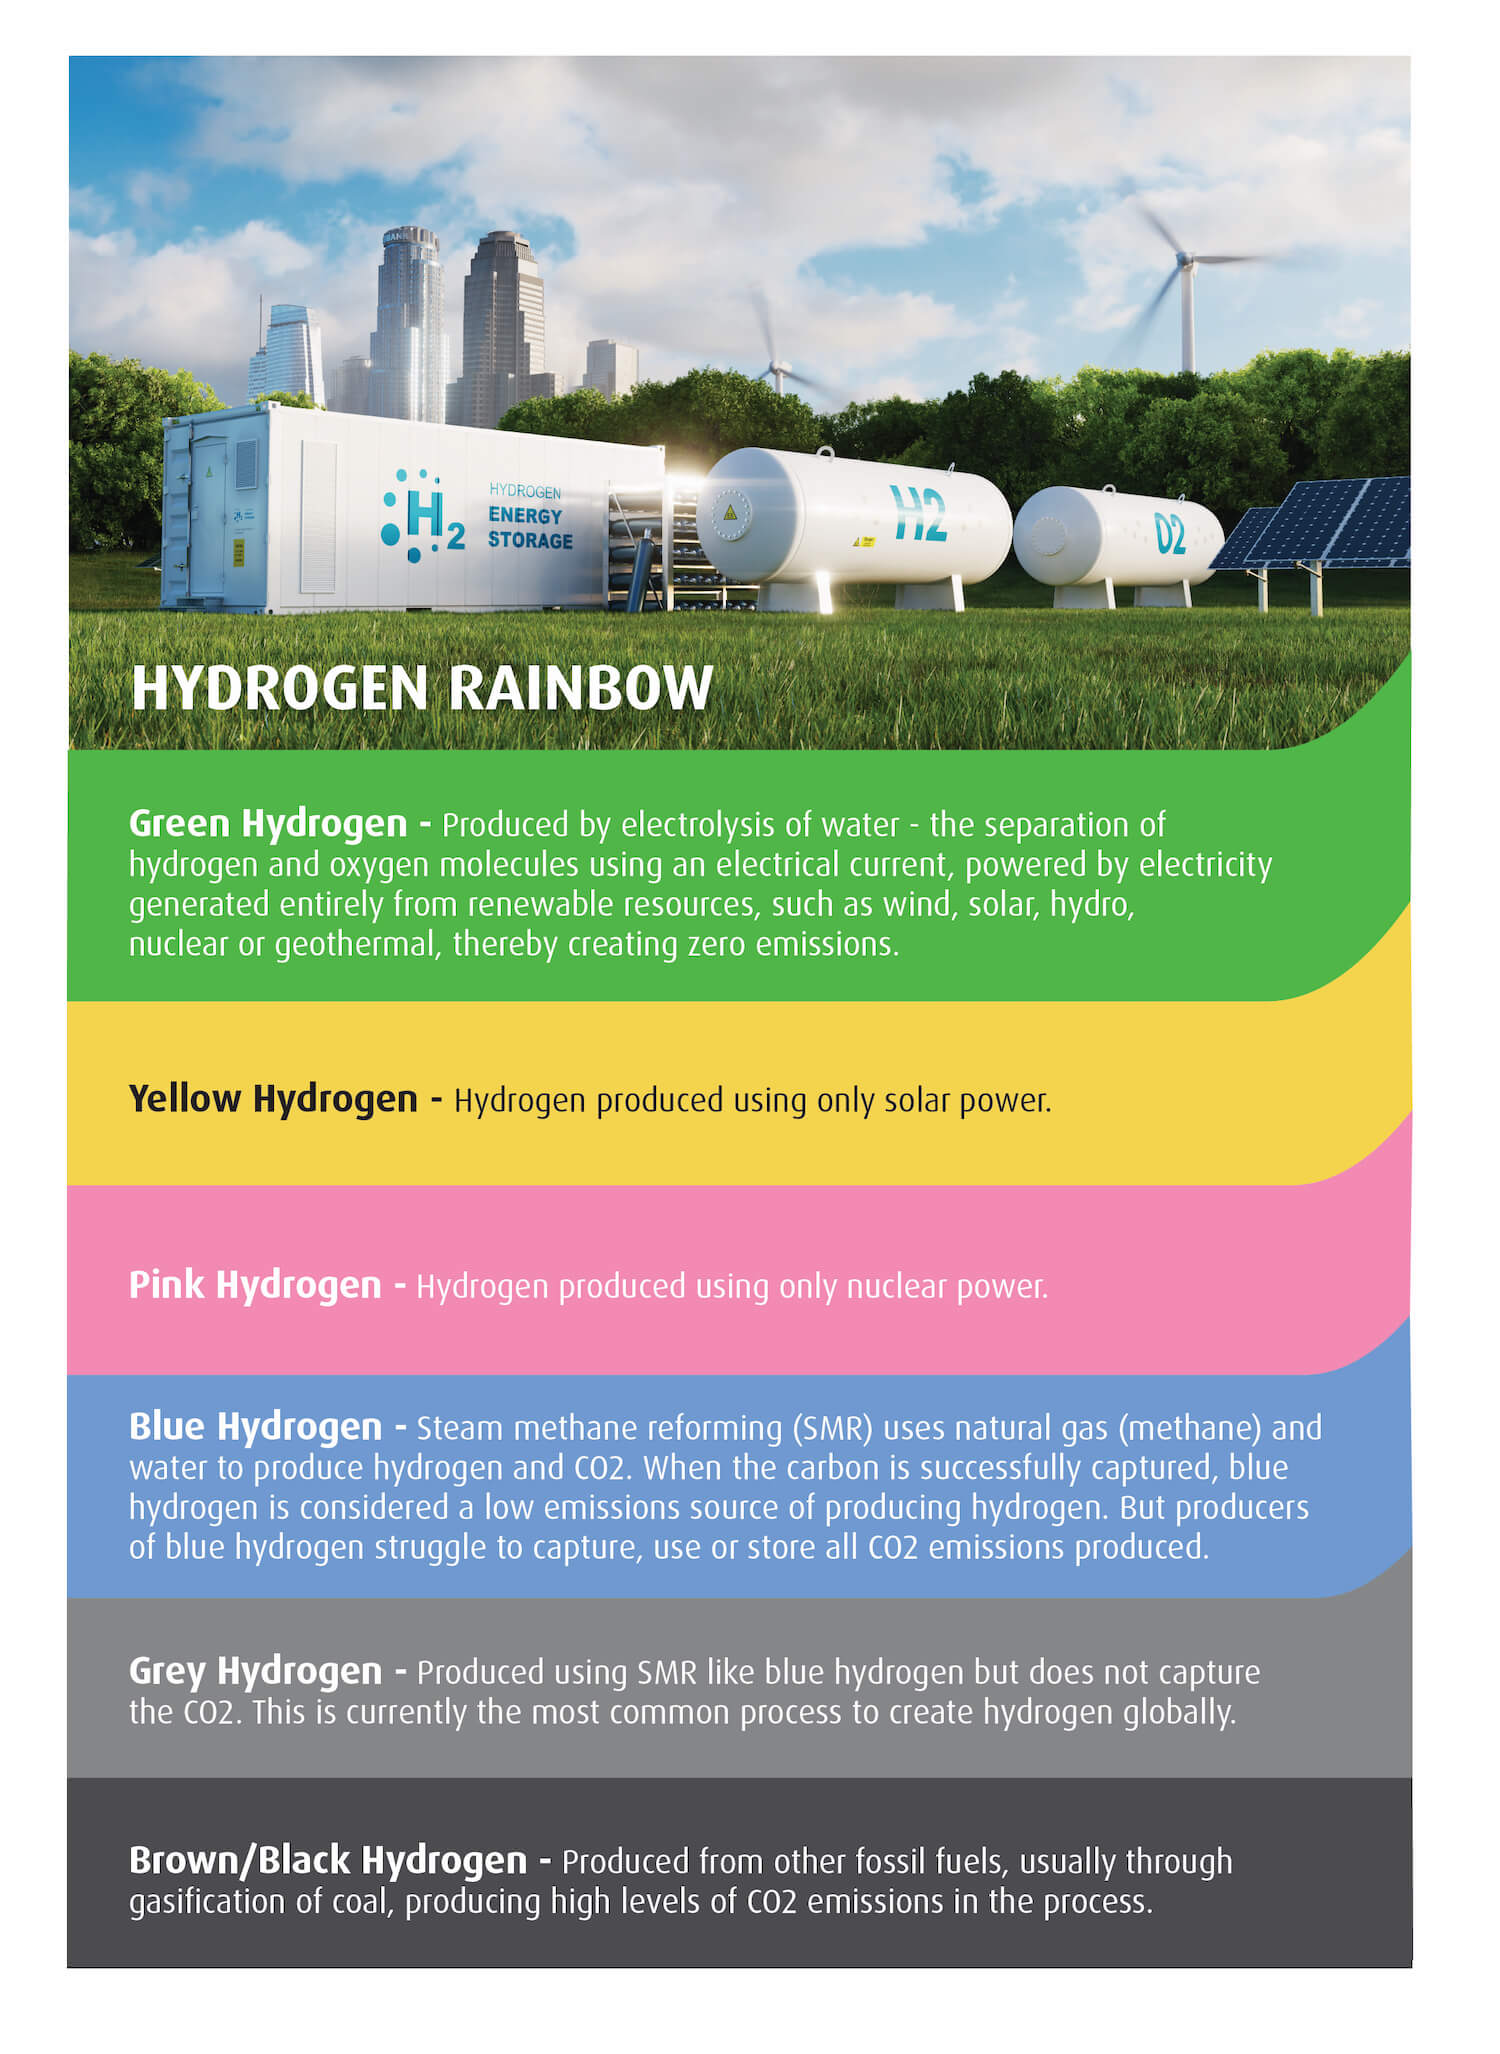 Carbon rainbow infographic